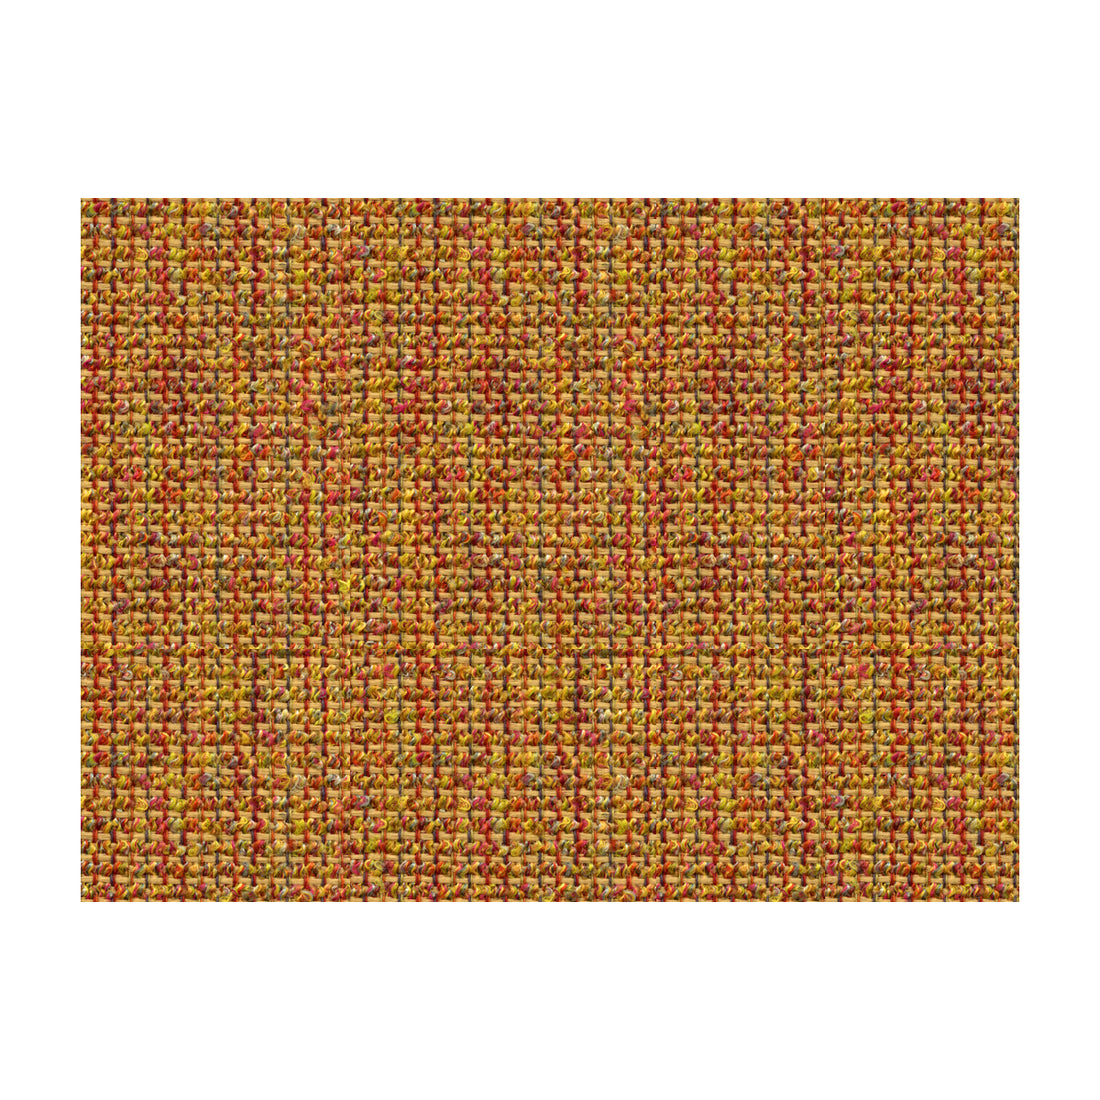 Kravet Smart fabric in 33589-417 color - pattern 33589.417.0 - by Kravet Smart